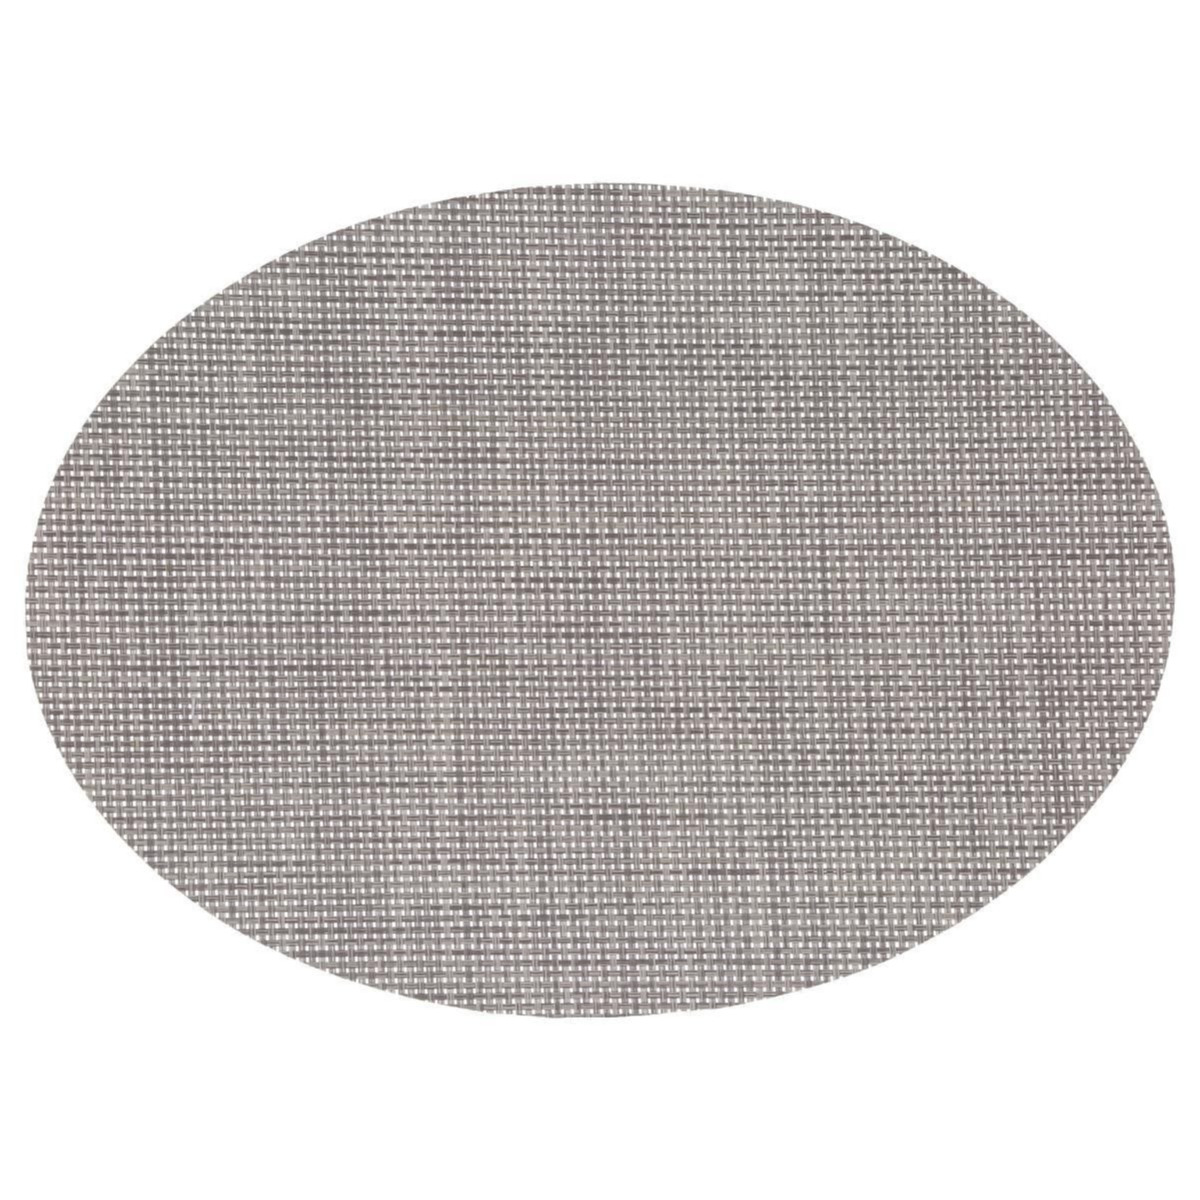 Ovale placemat Maoli grijs kunststof 48 x 35 cm